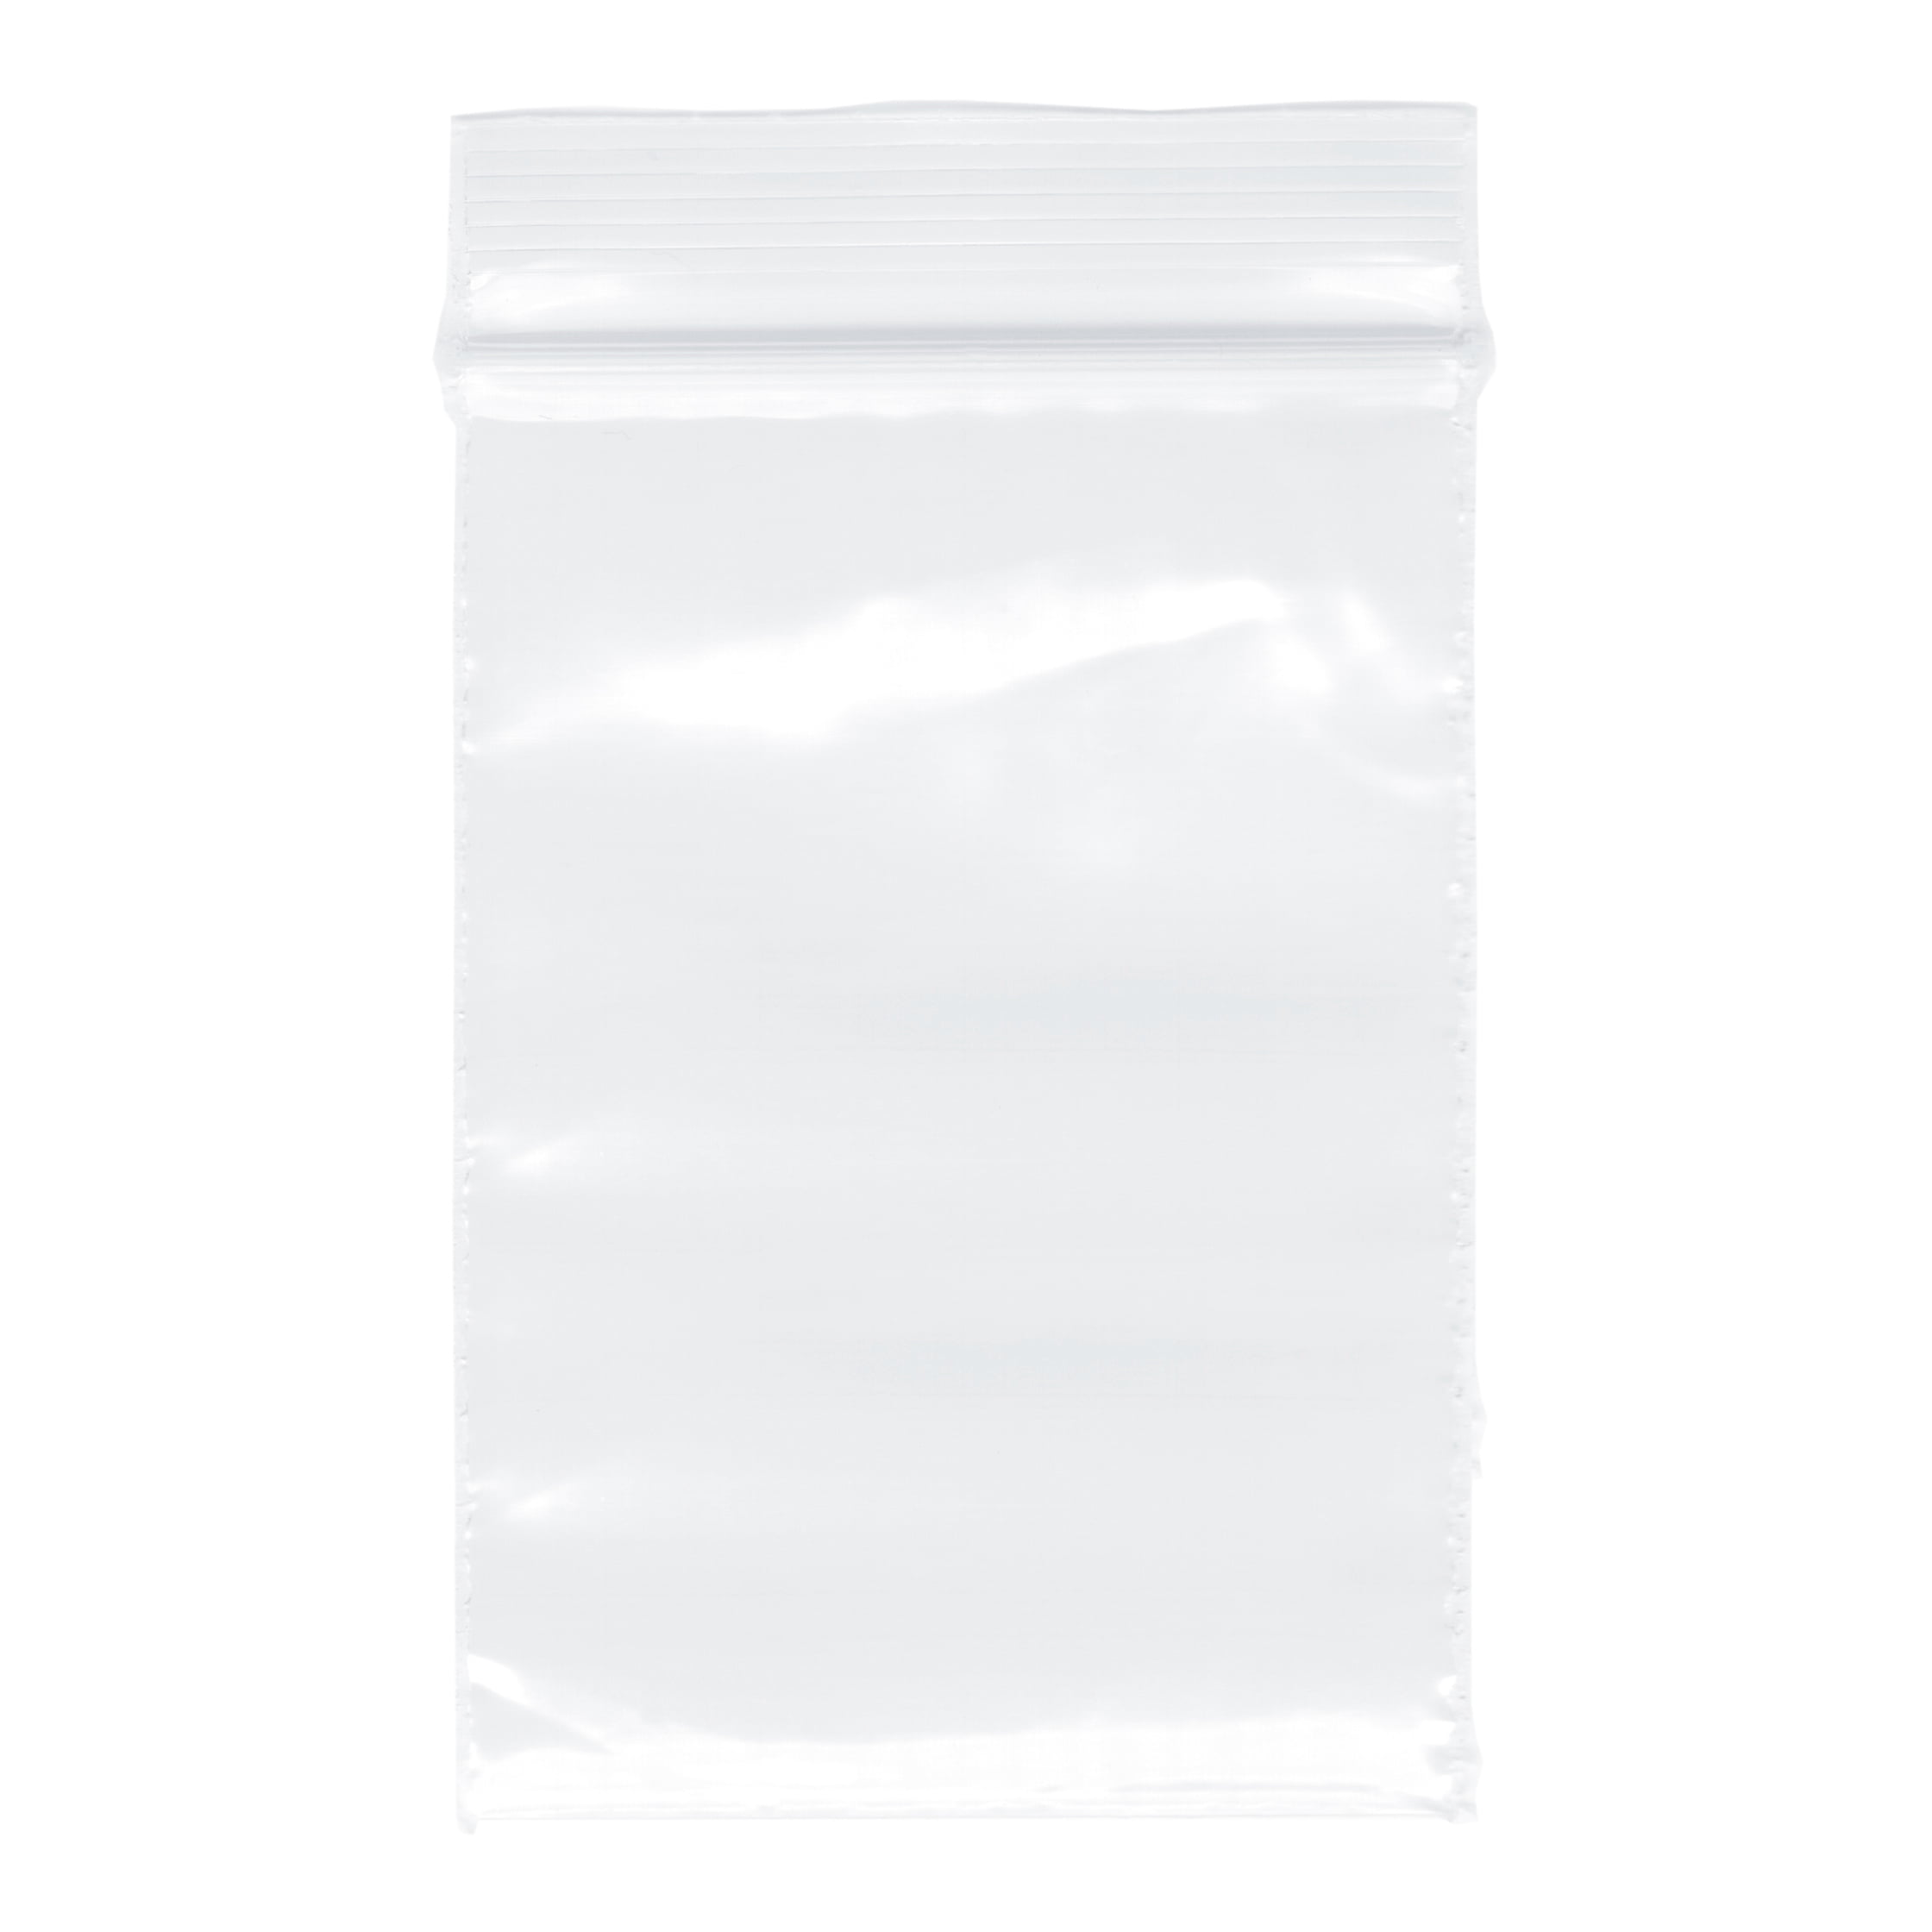 Vinyl Zipper Wallet Clear Zipper Bags Currency Bag Multipurpose Utility Bag- 2 Pack 6 Width x 11 Length 